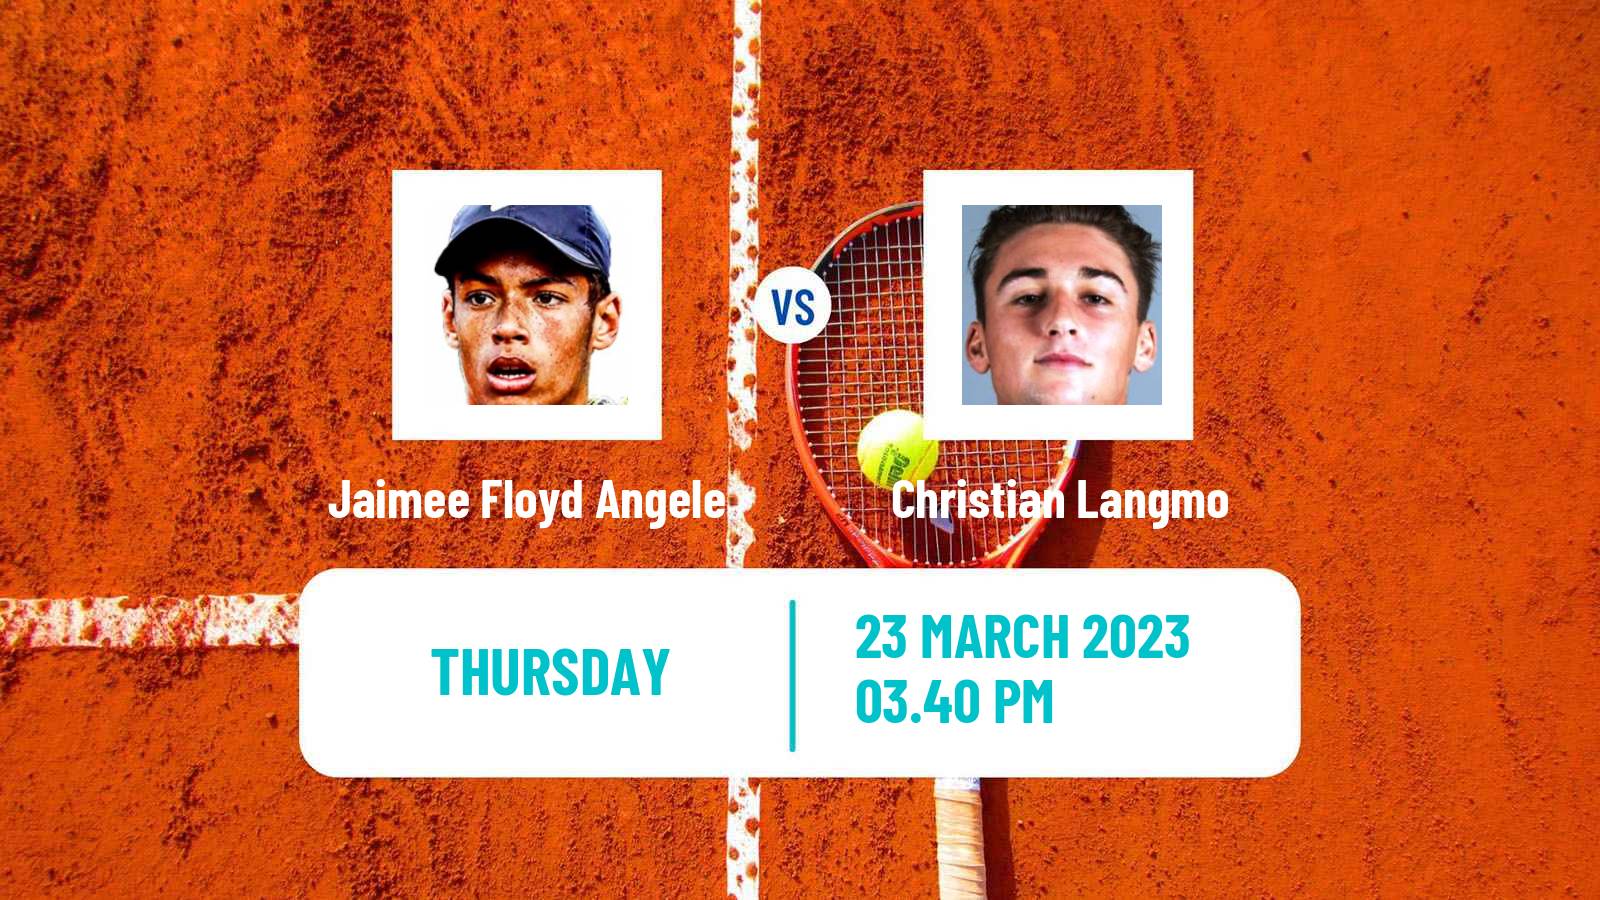 Tennis ITF Tournaments Jaimee Floyd Angele - Christian Langmo